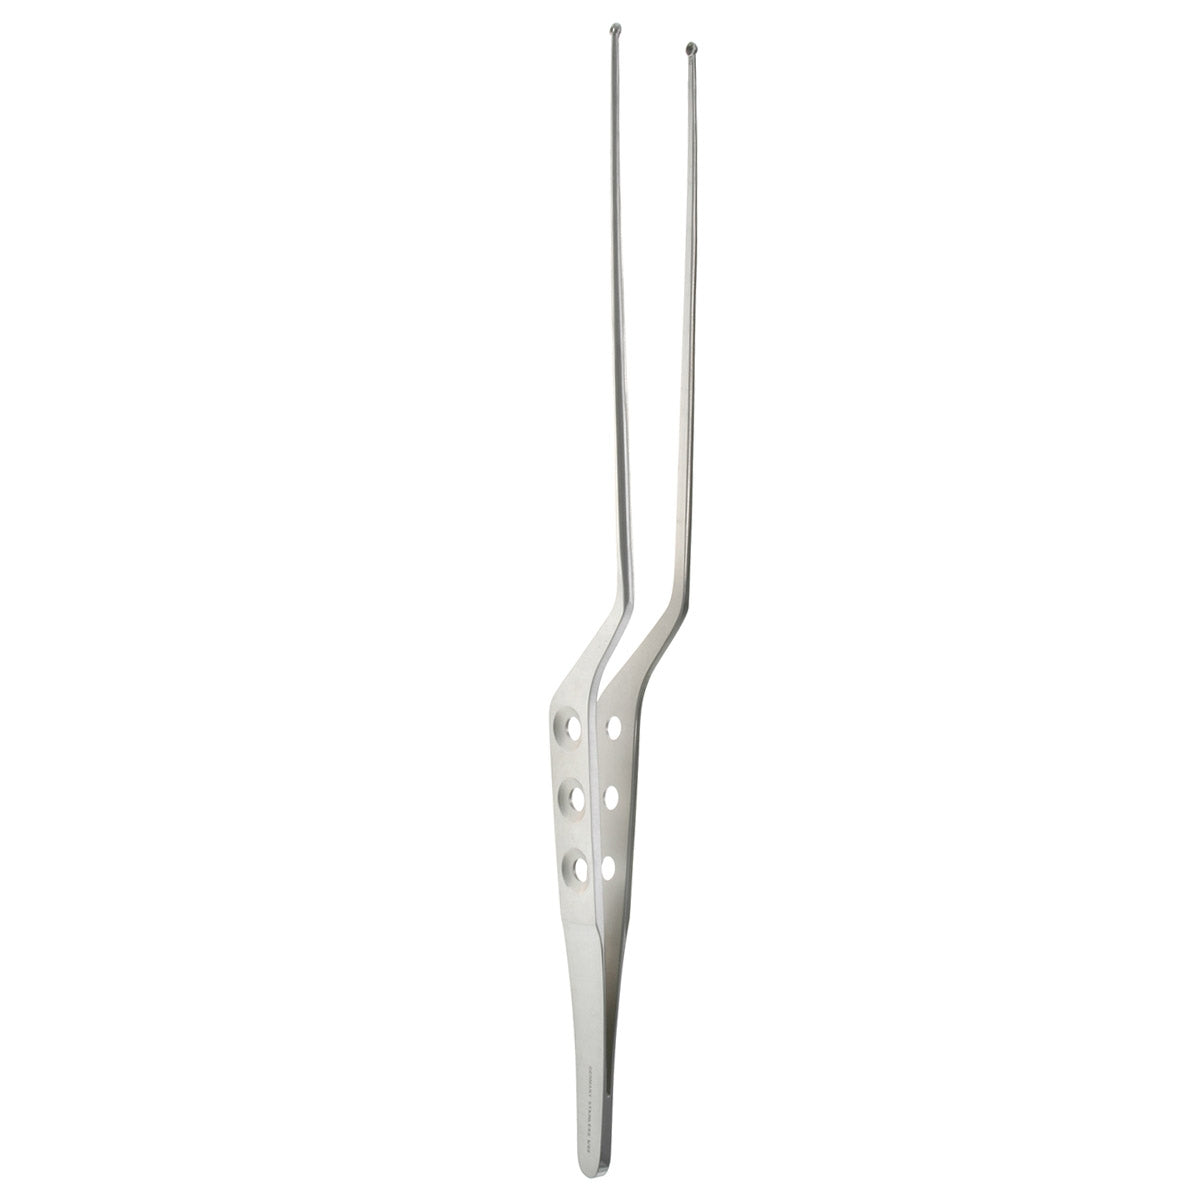 Yasargil-Samii Forceps &#8211; 3mm Spoon